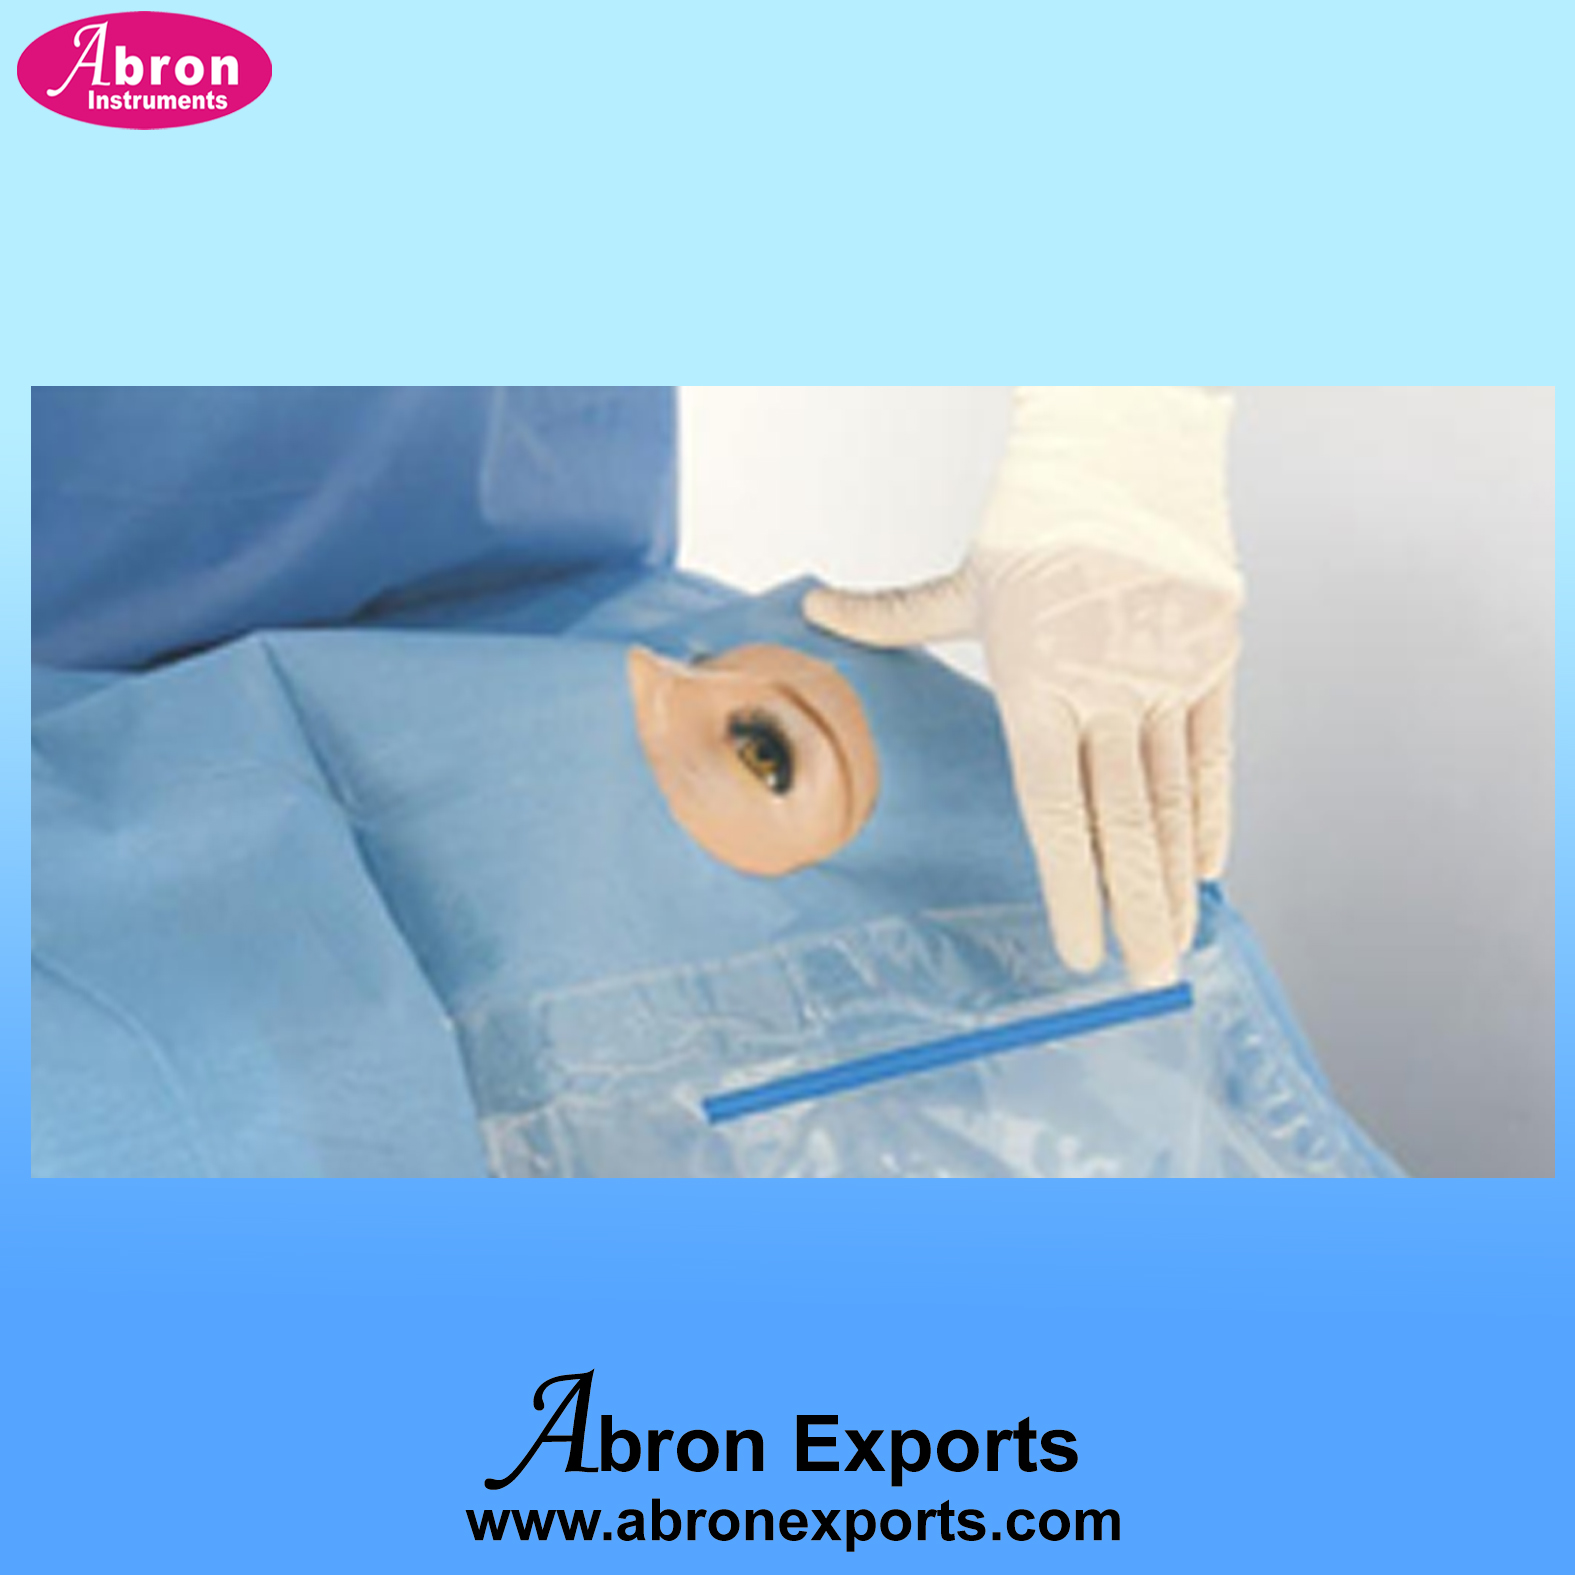 am-522-pd2-Sterile-drapes-one-with-hole-disposable-hospital-ot-surgical-abron-plain-drape-sm-abron